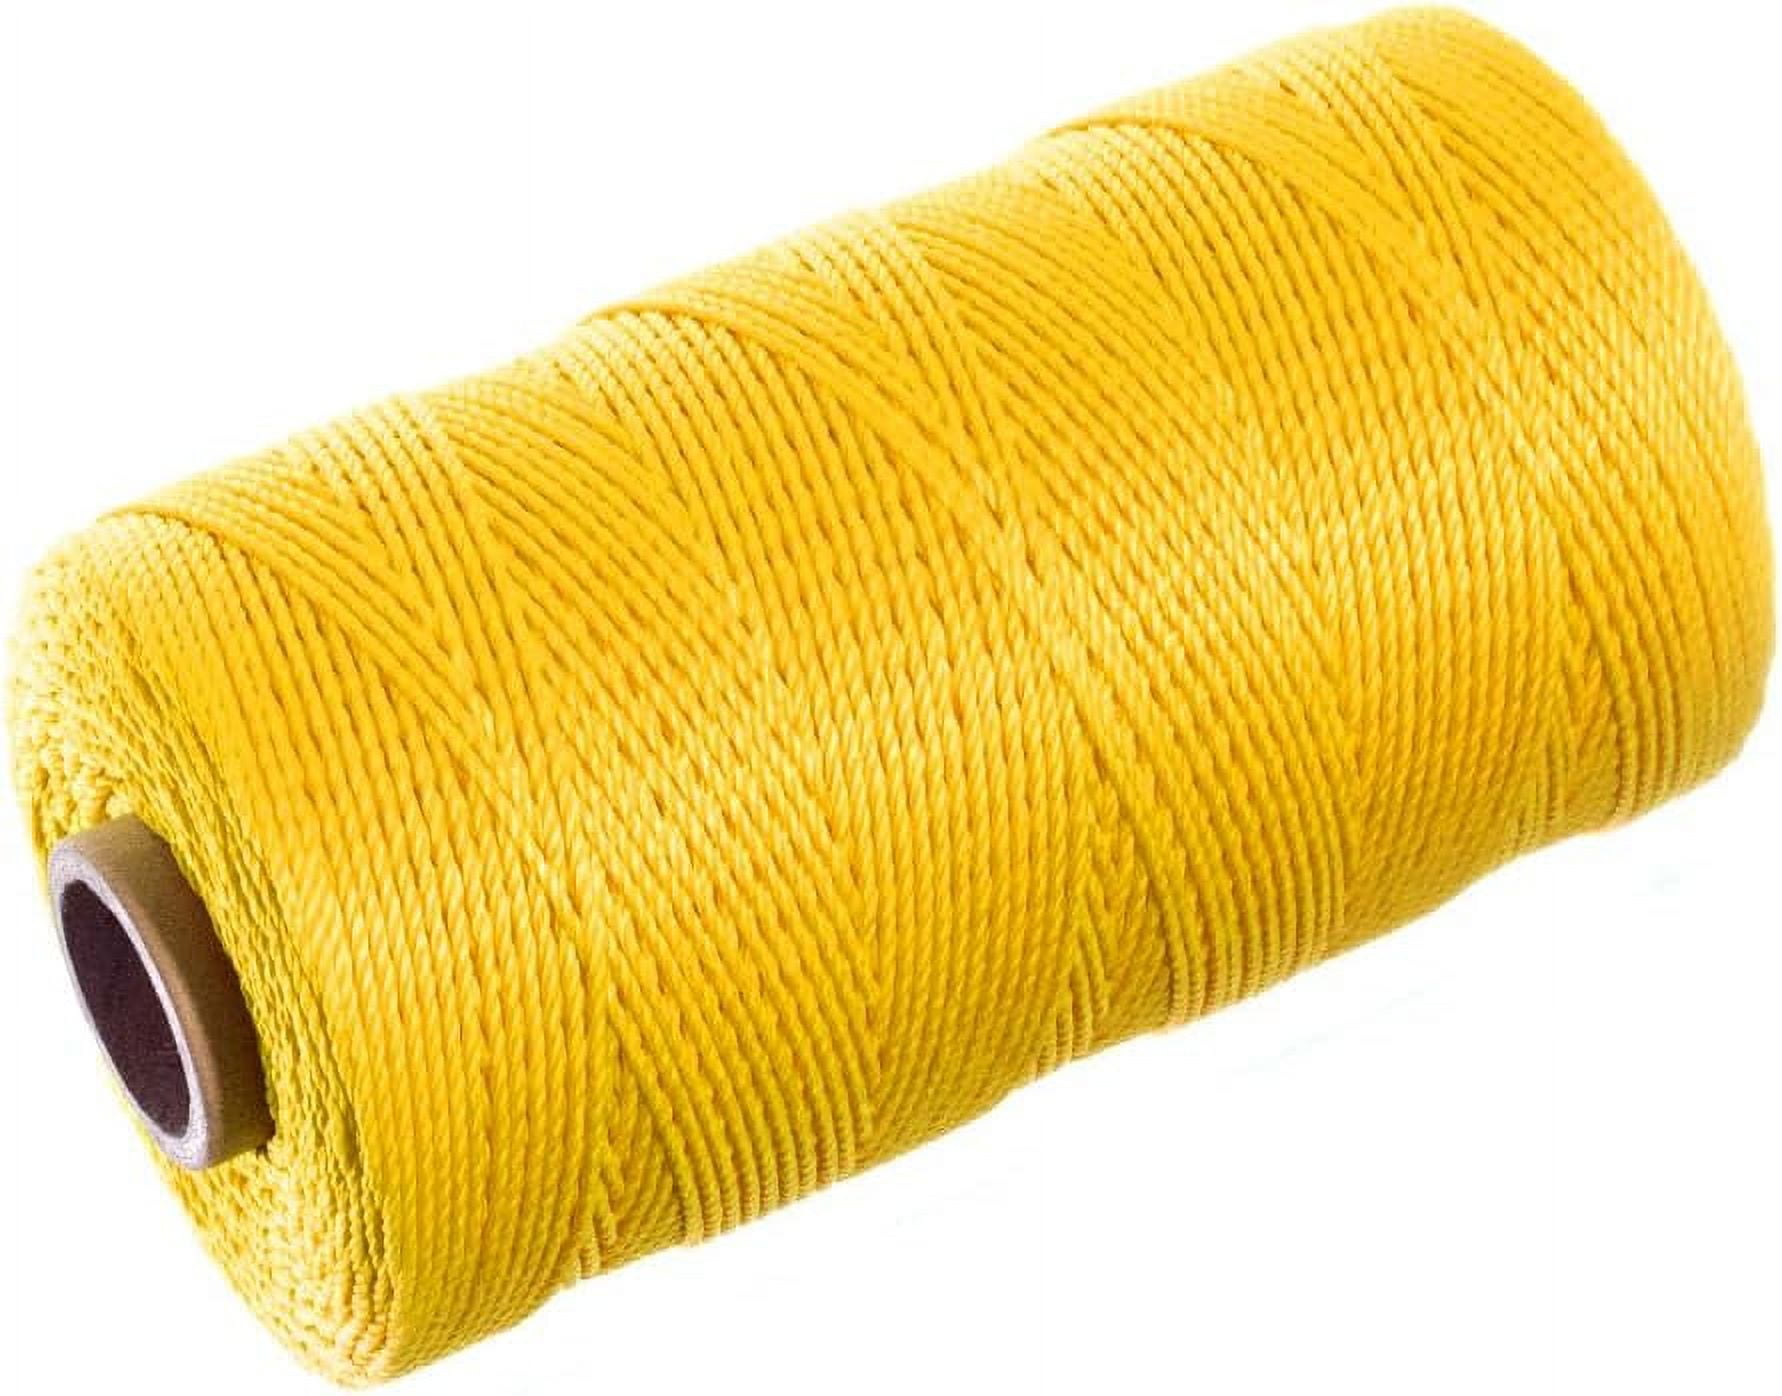 Braided Nylon Mason Line - Twine String For Marine, Masonry, Crafting,  Gardening Uses 